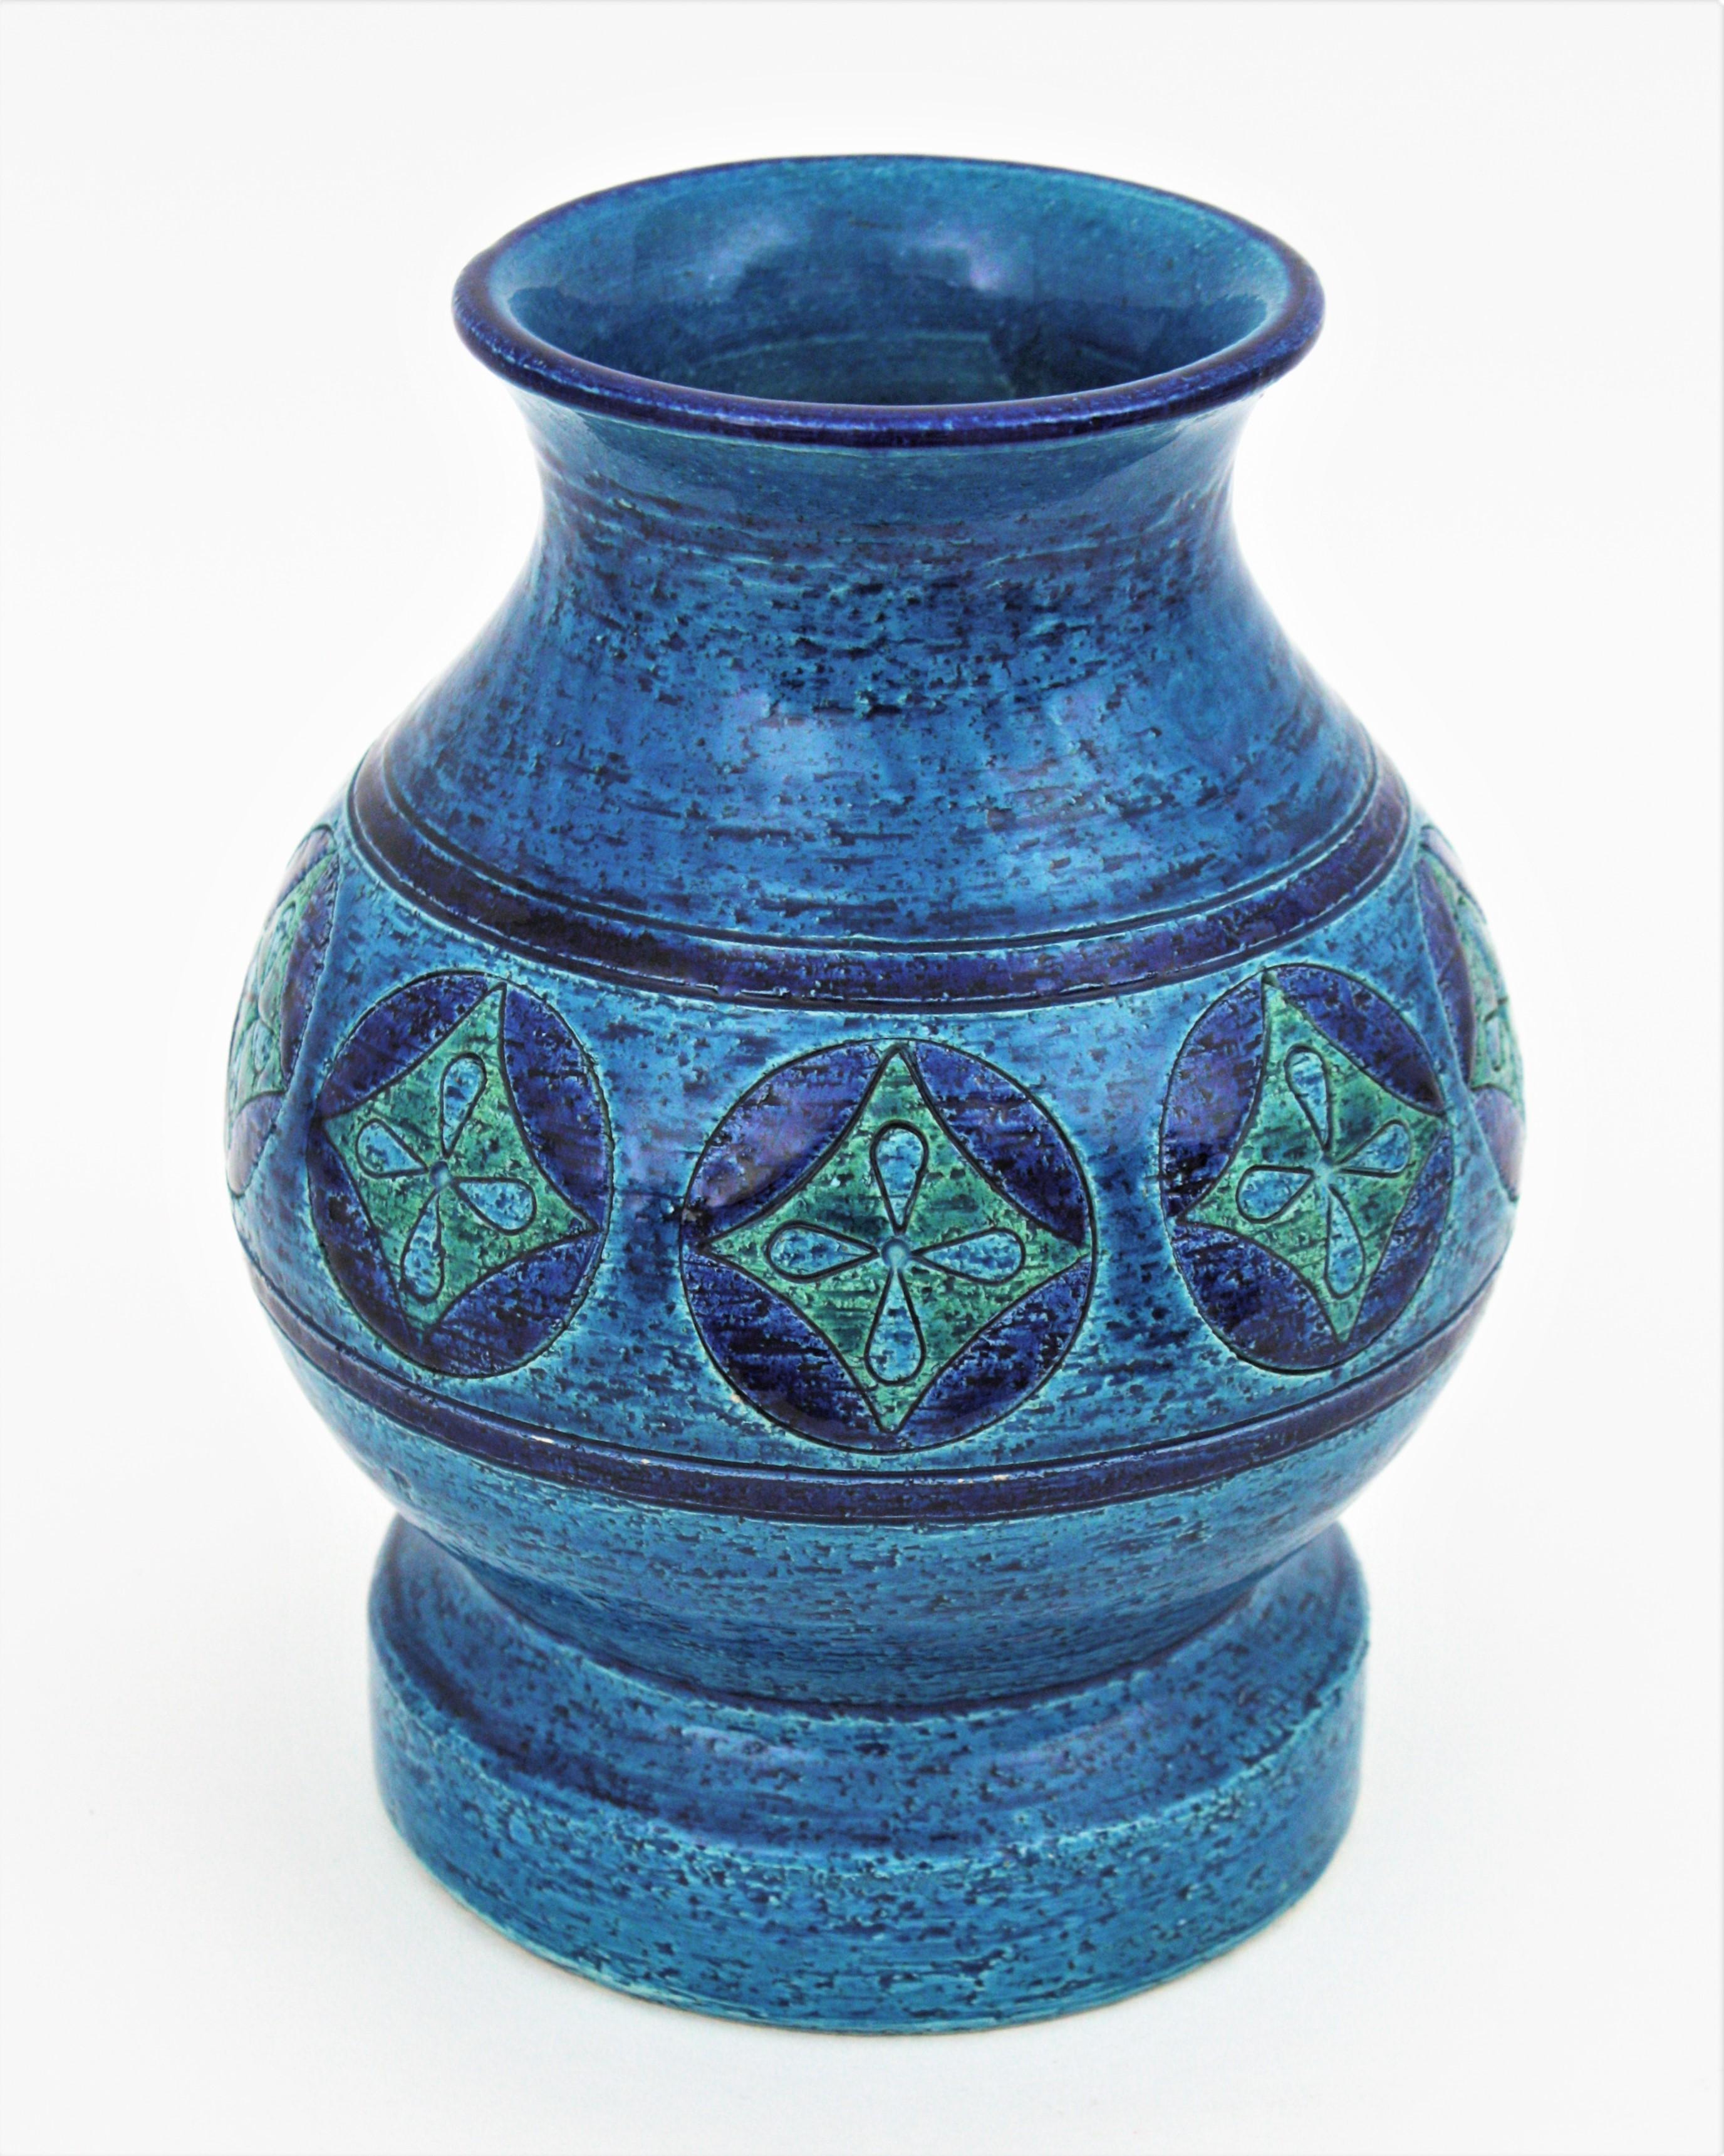 Bitossi Aldo Londi Rimini Blu Keramikvase, Italien, 1960er Jahre (20. Jahrhundert) im Angebot